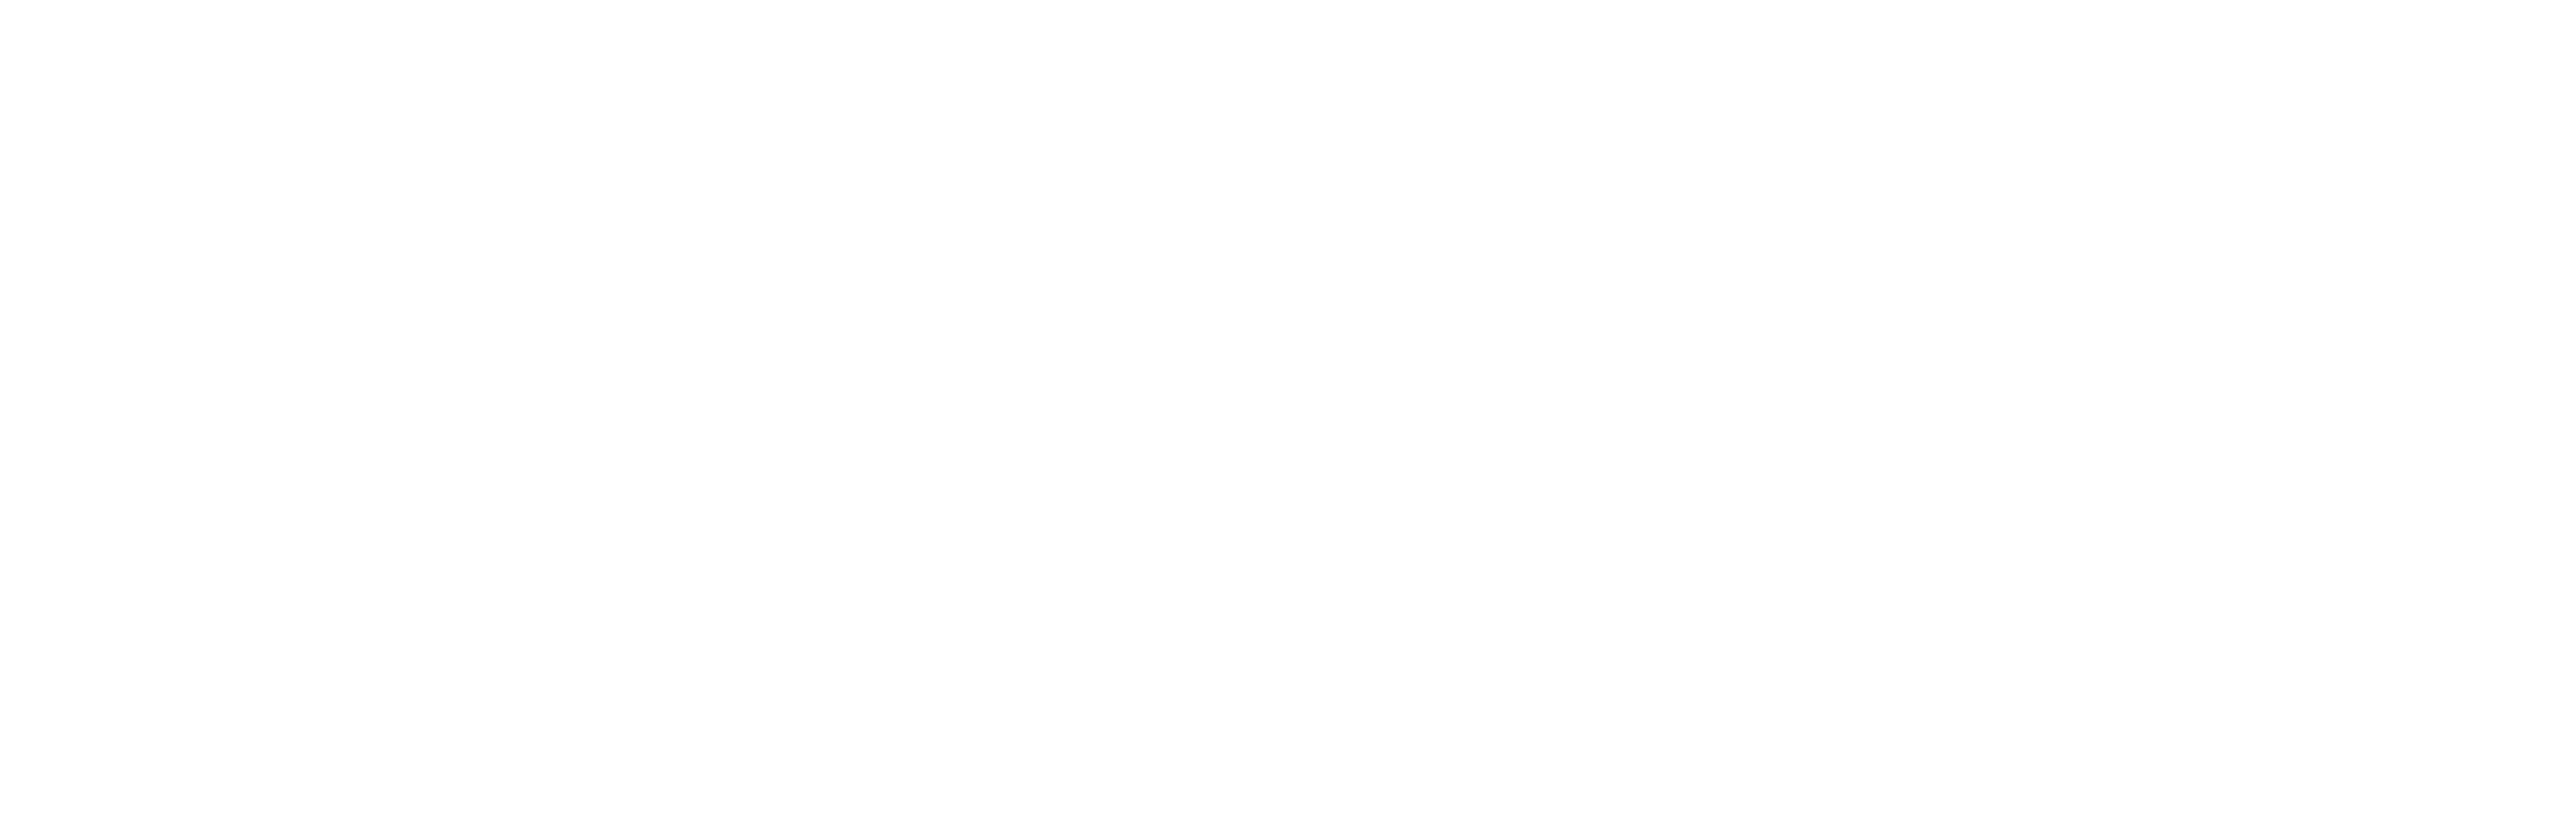 Riverside Beads